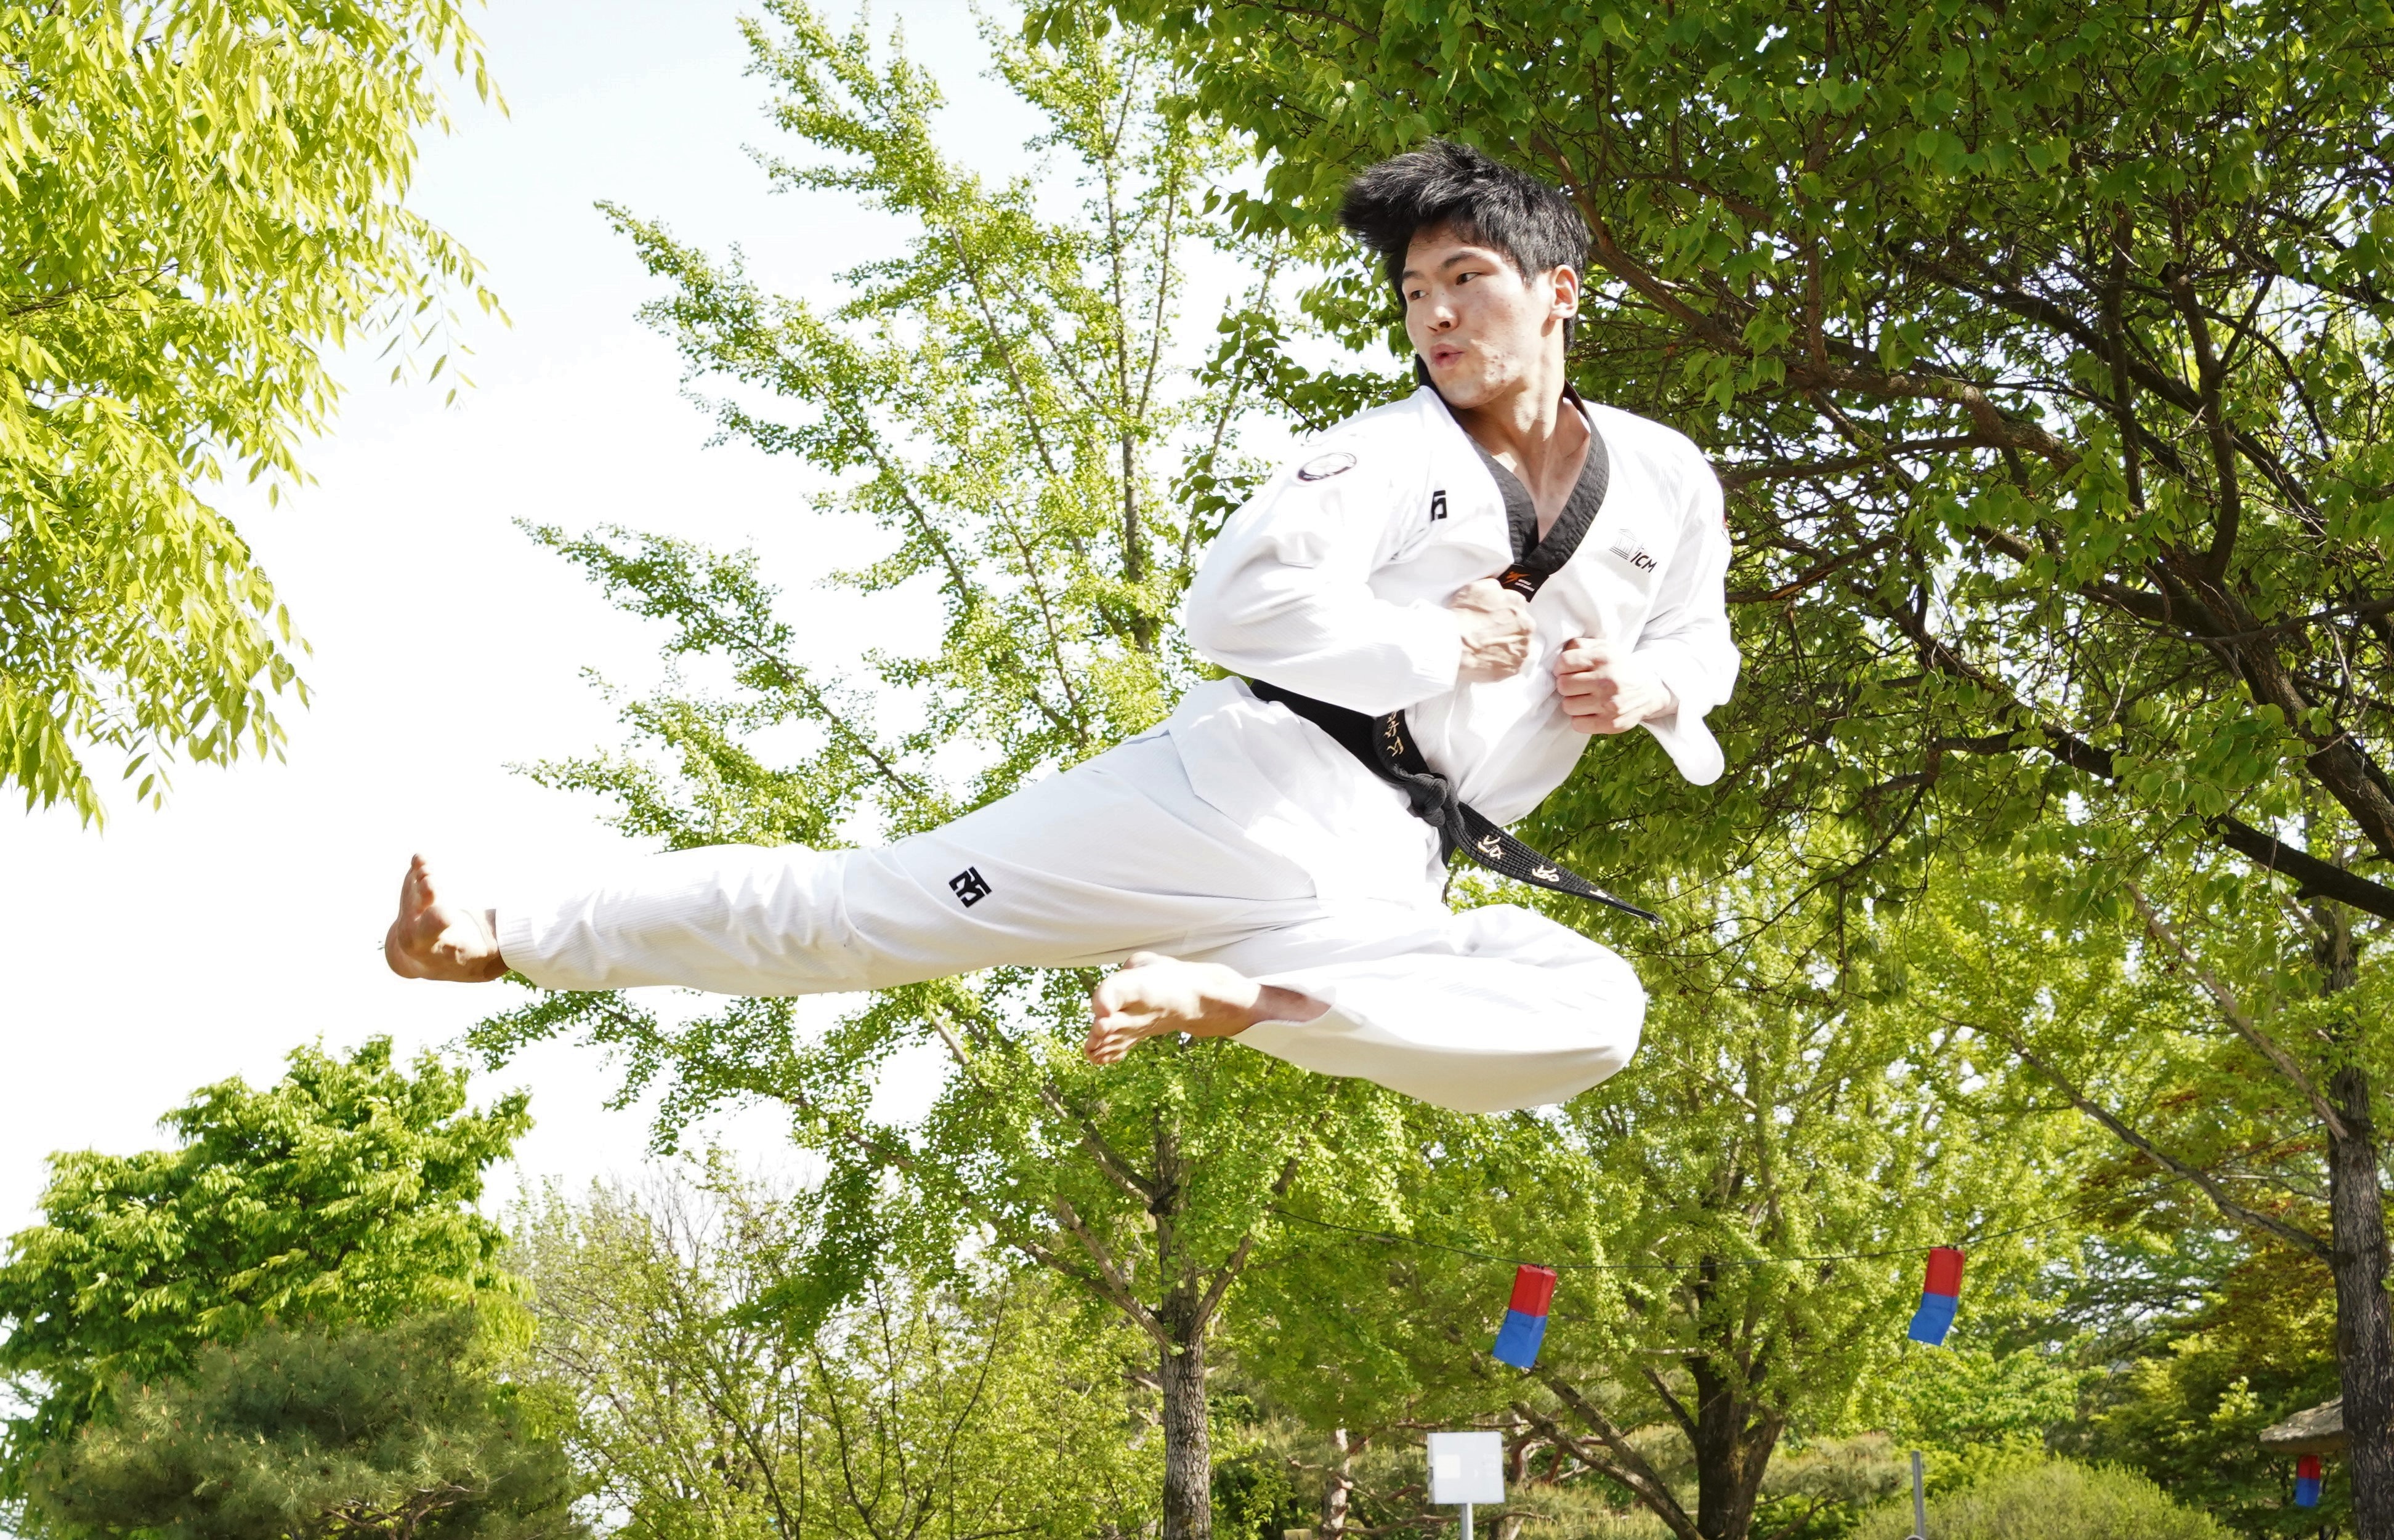 2. Taekwondo